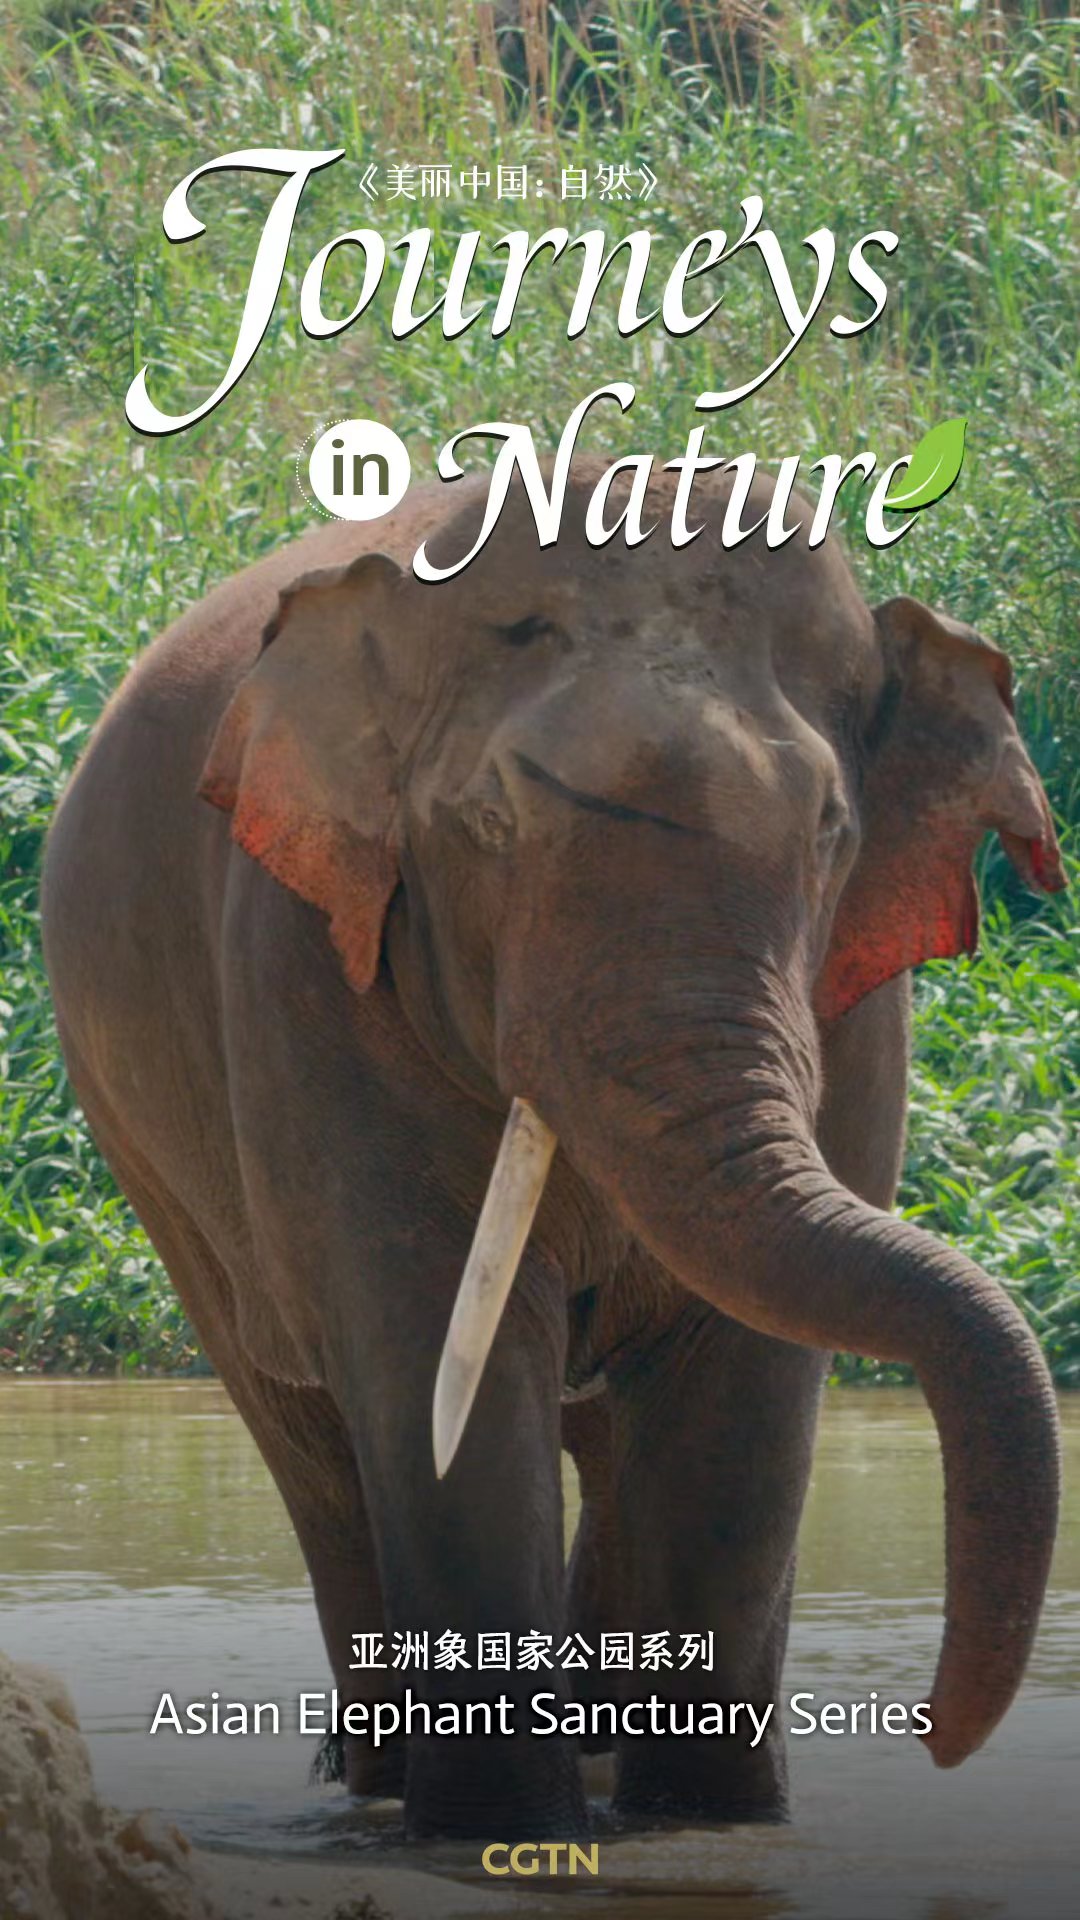 CGTN Nature presents 'Journeys in Nature: Asian Elephant Sanctuary Series'